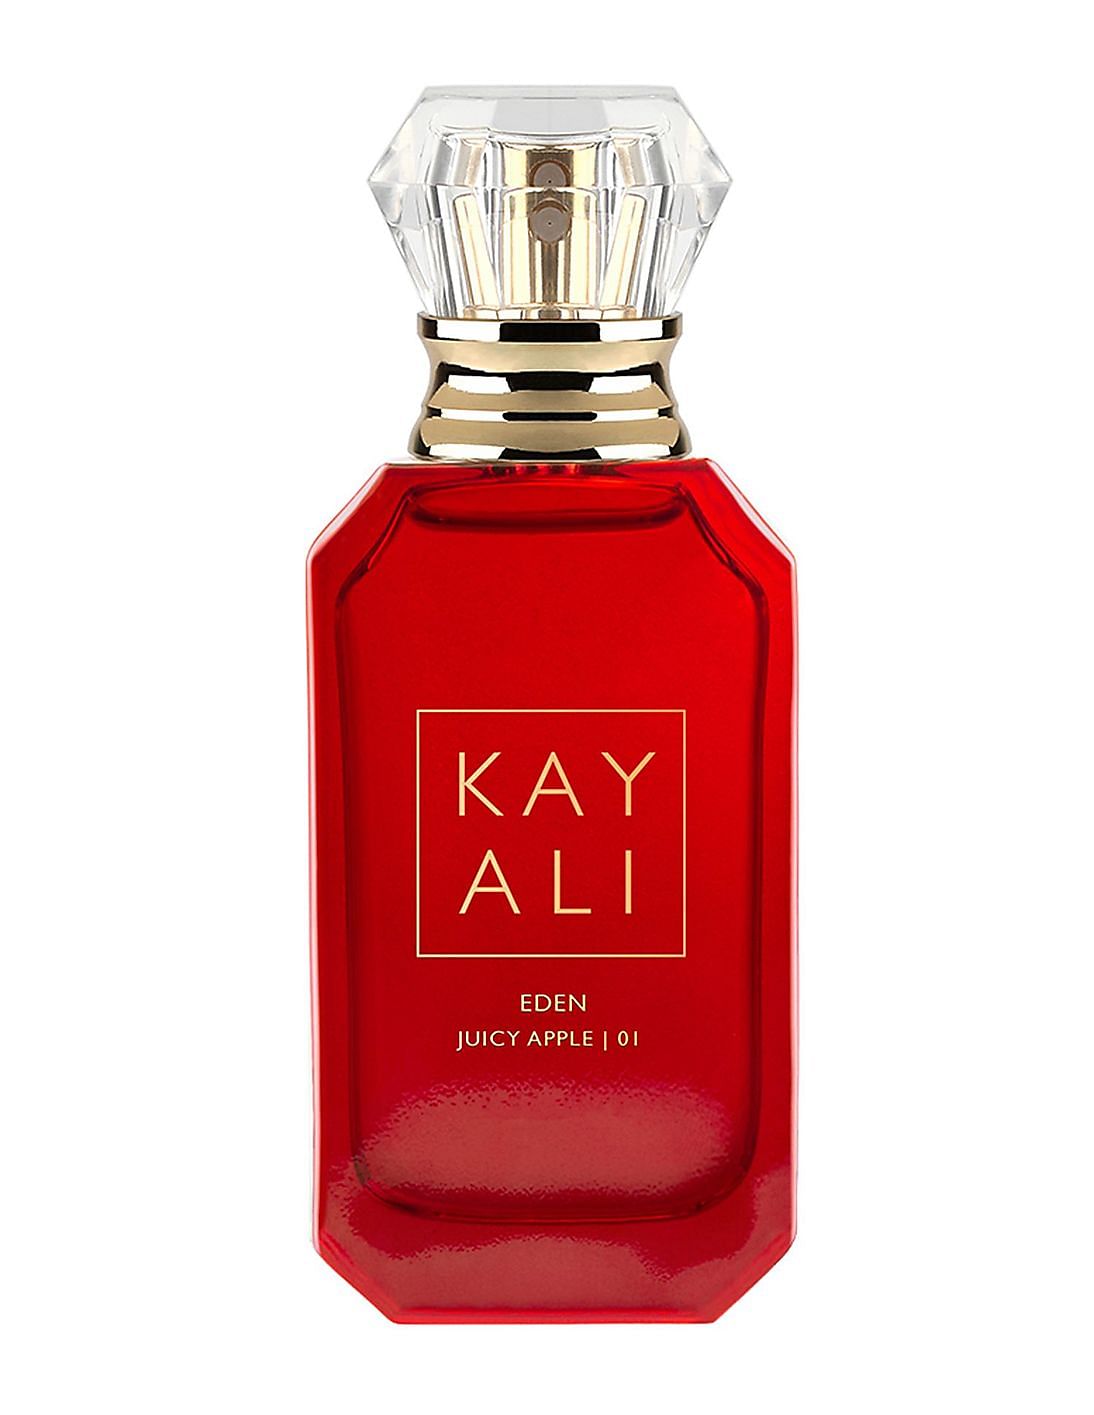 Buy Kayali Eden Juicy Apple 01 Eau De Parfum - NNNOW.com